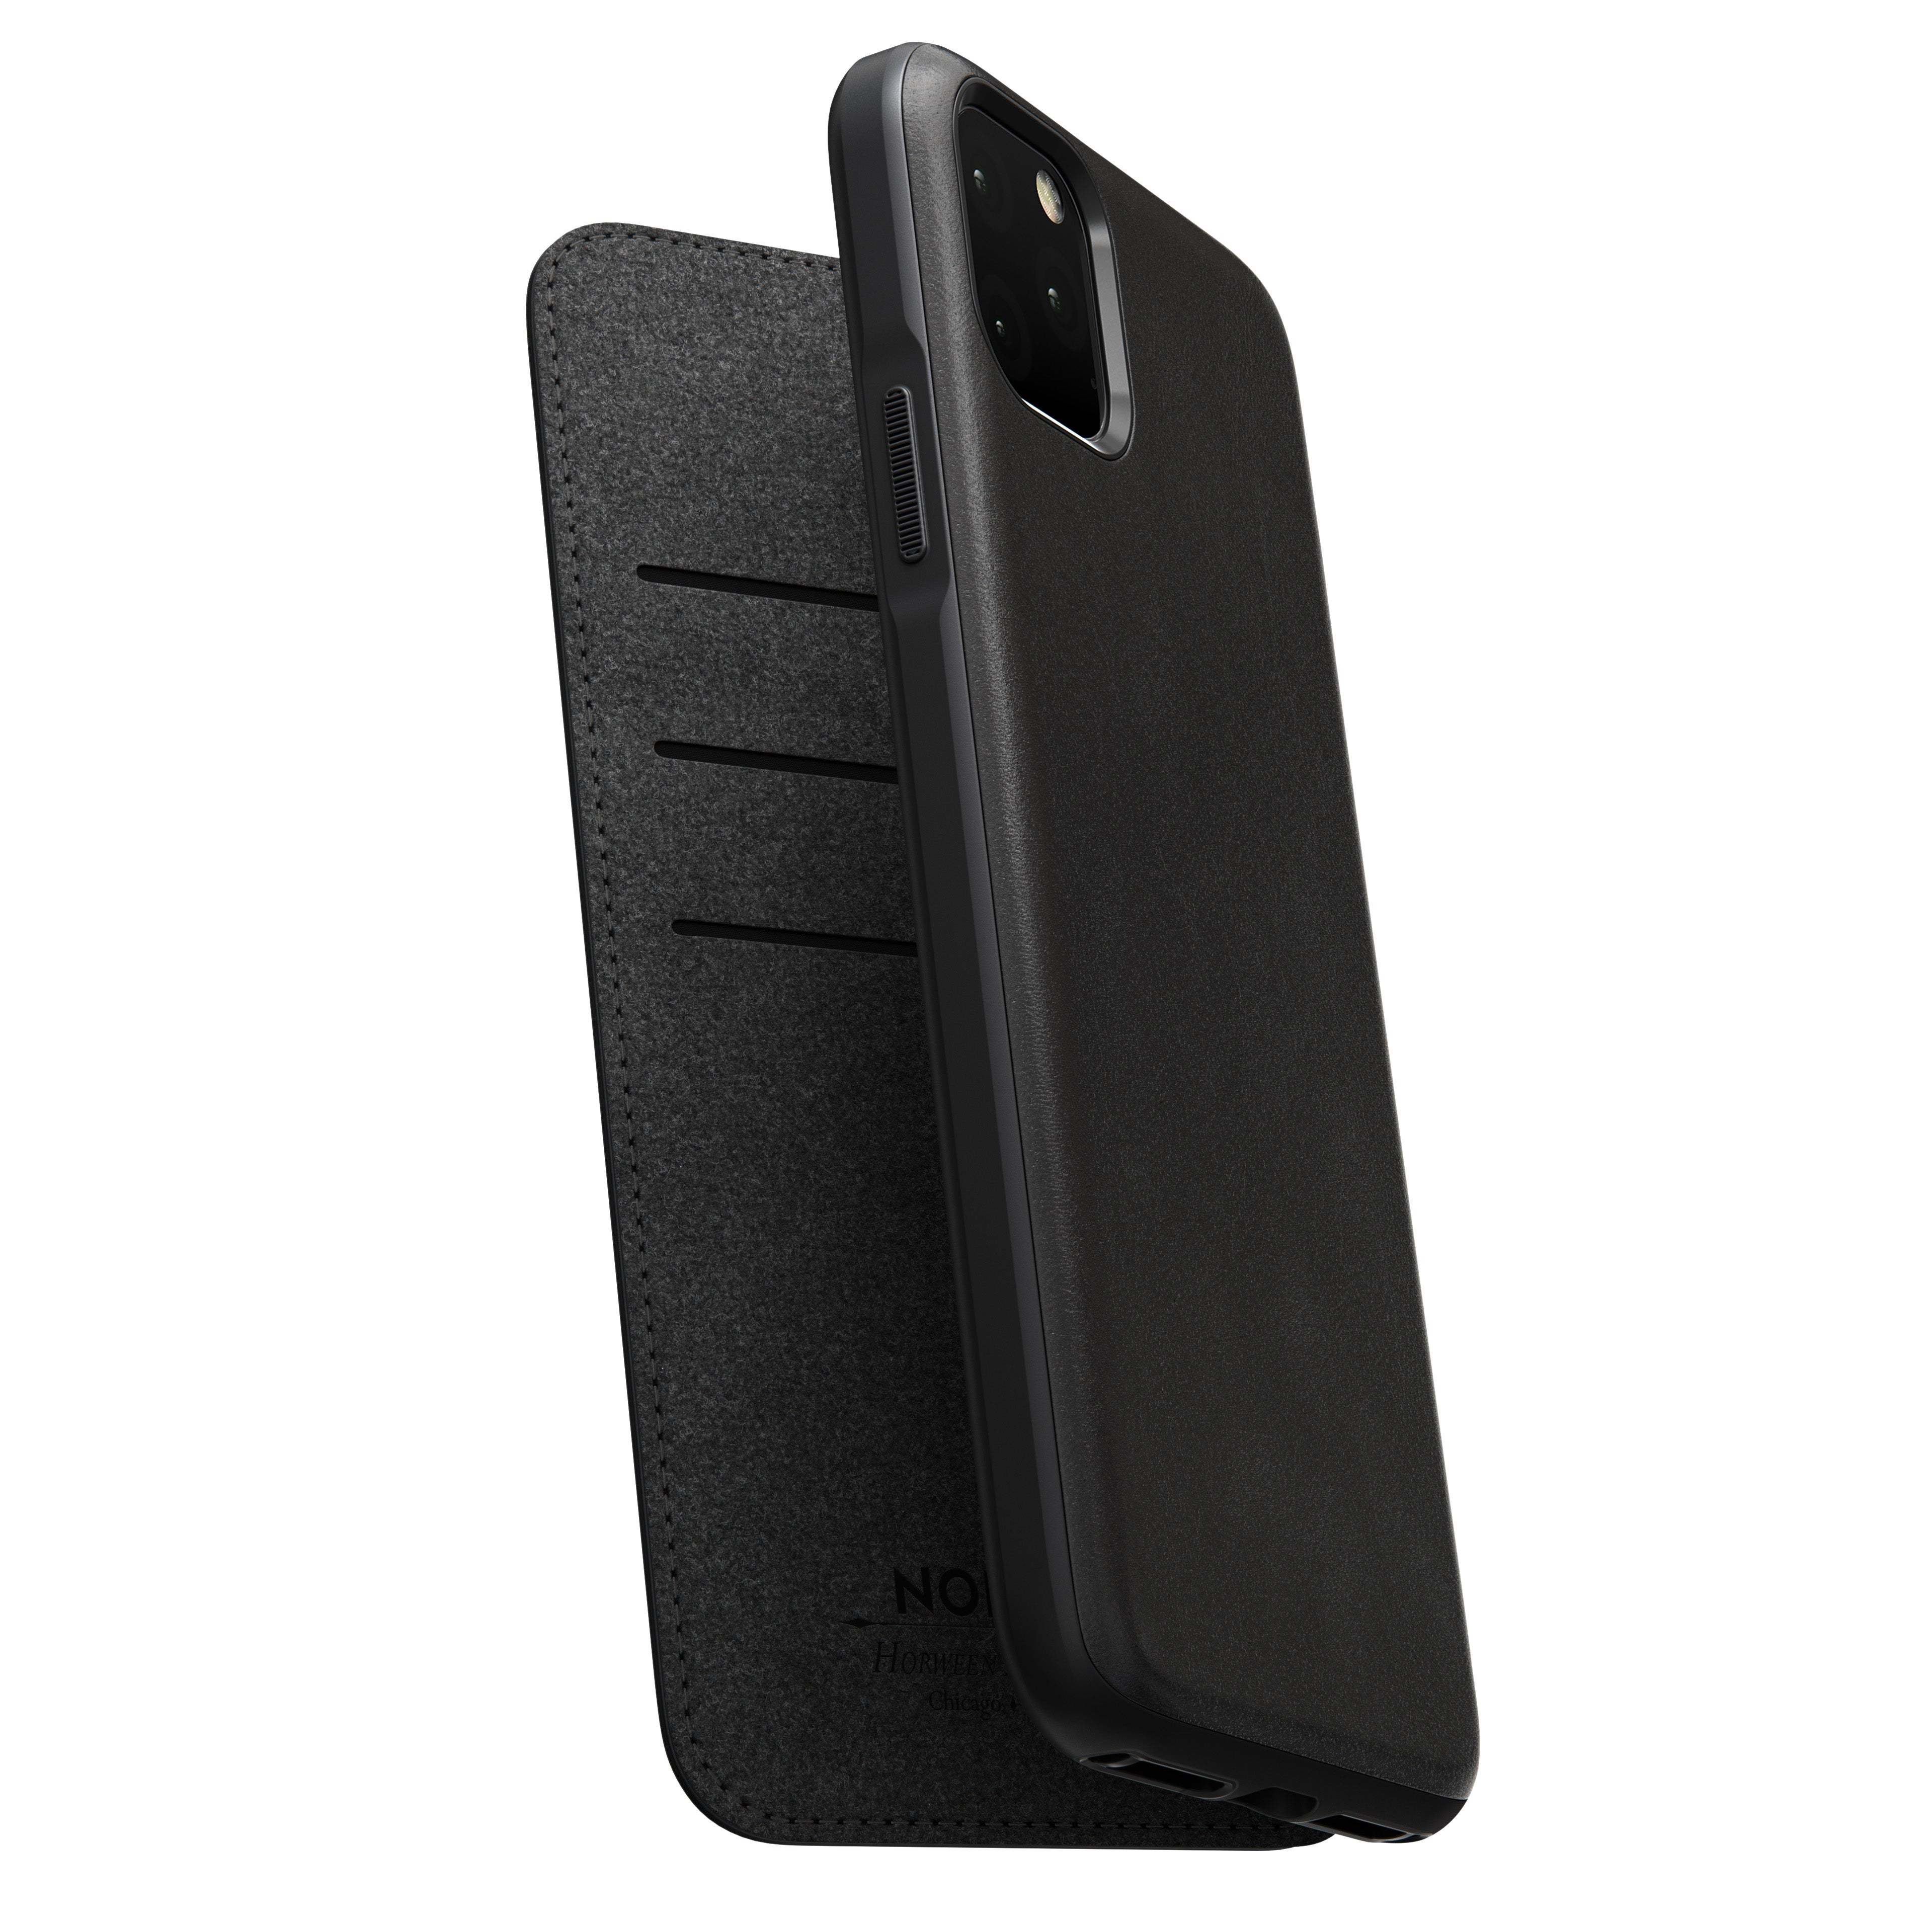 Leather Folio - Rugged - iPhone 11 Pro Max - Black